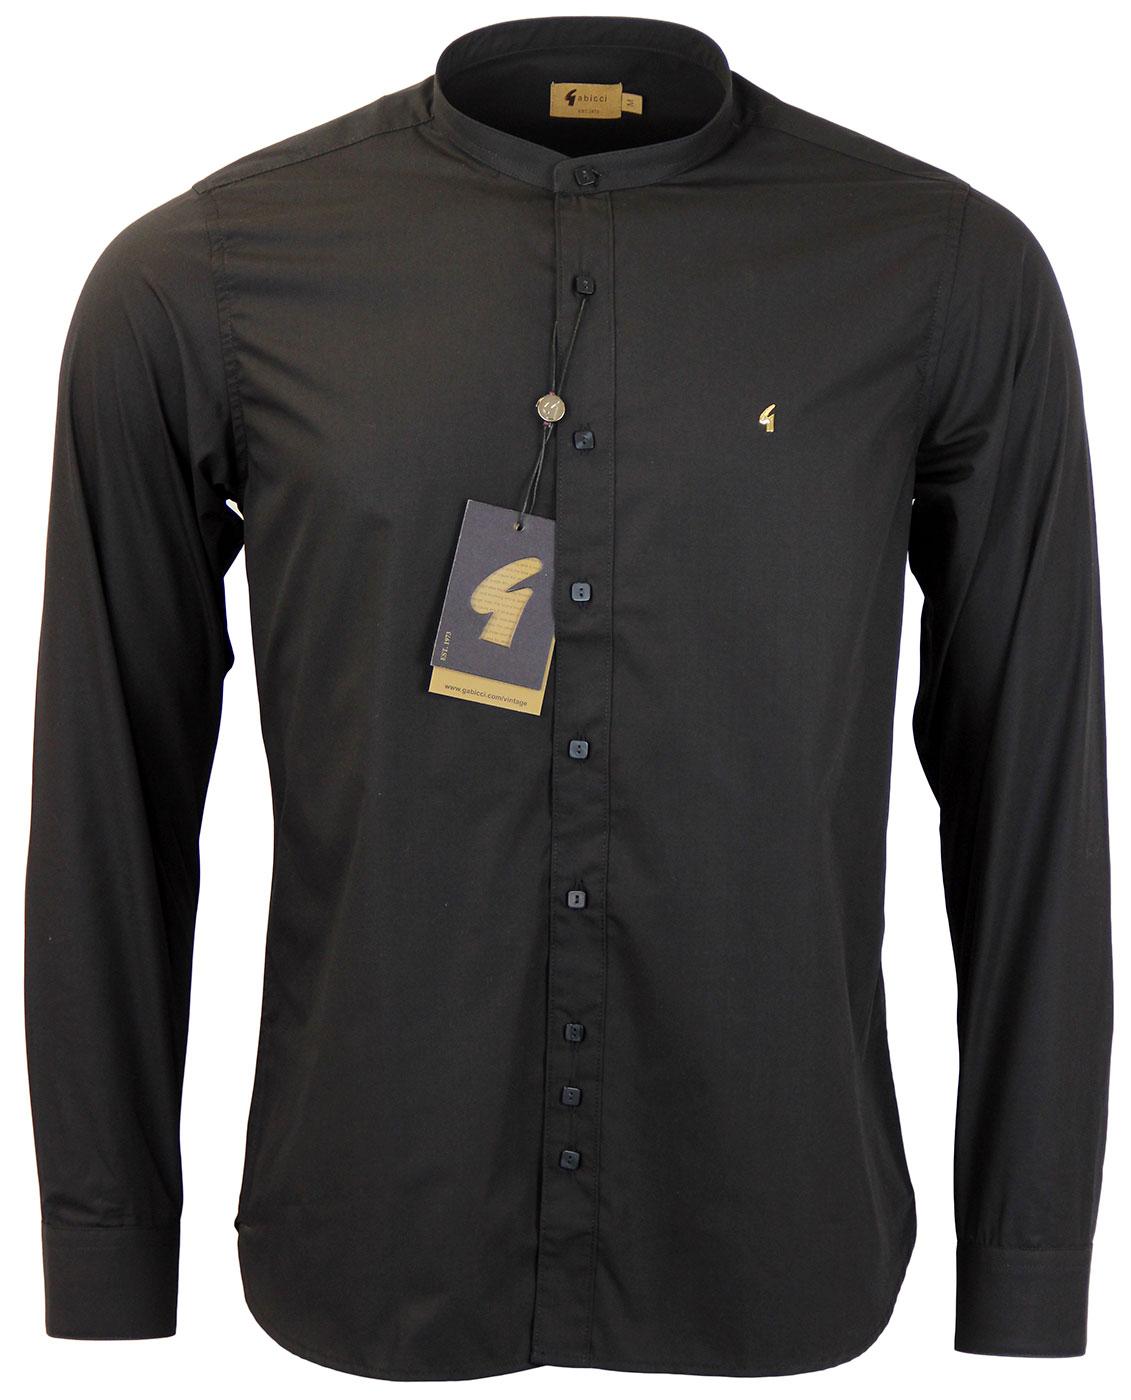 GABICCI VINTAGE 60s Mod Grandad Collar Shirt BLACK